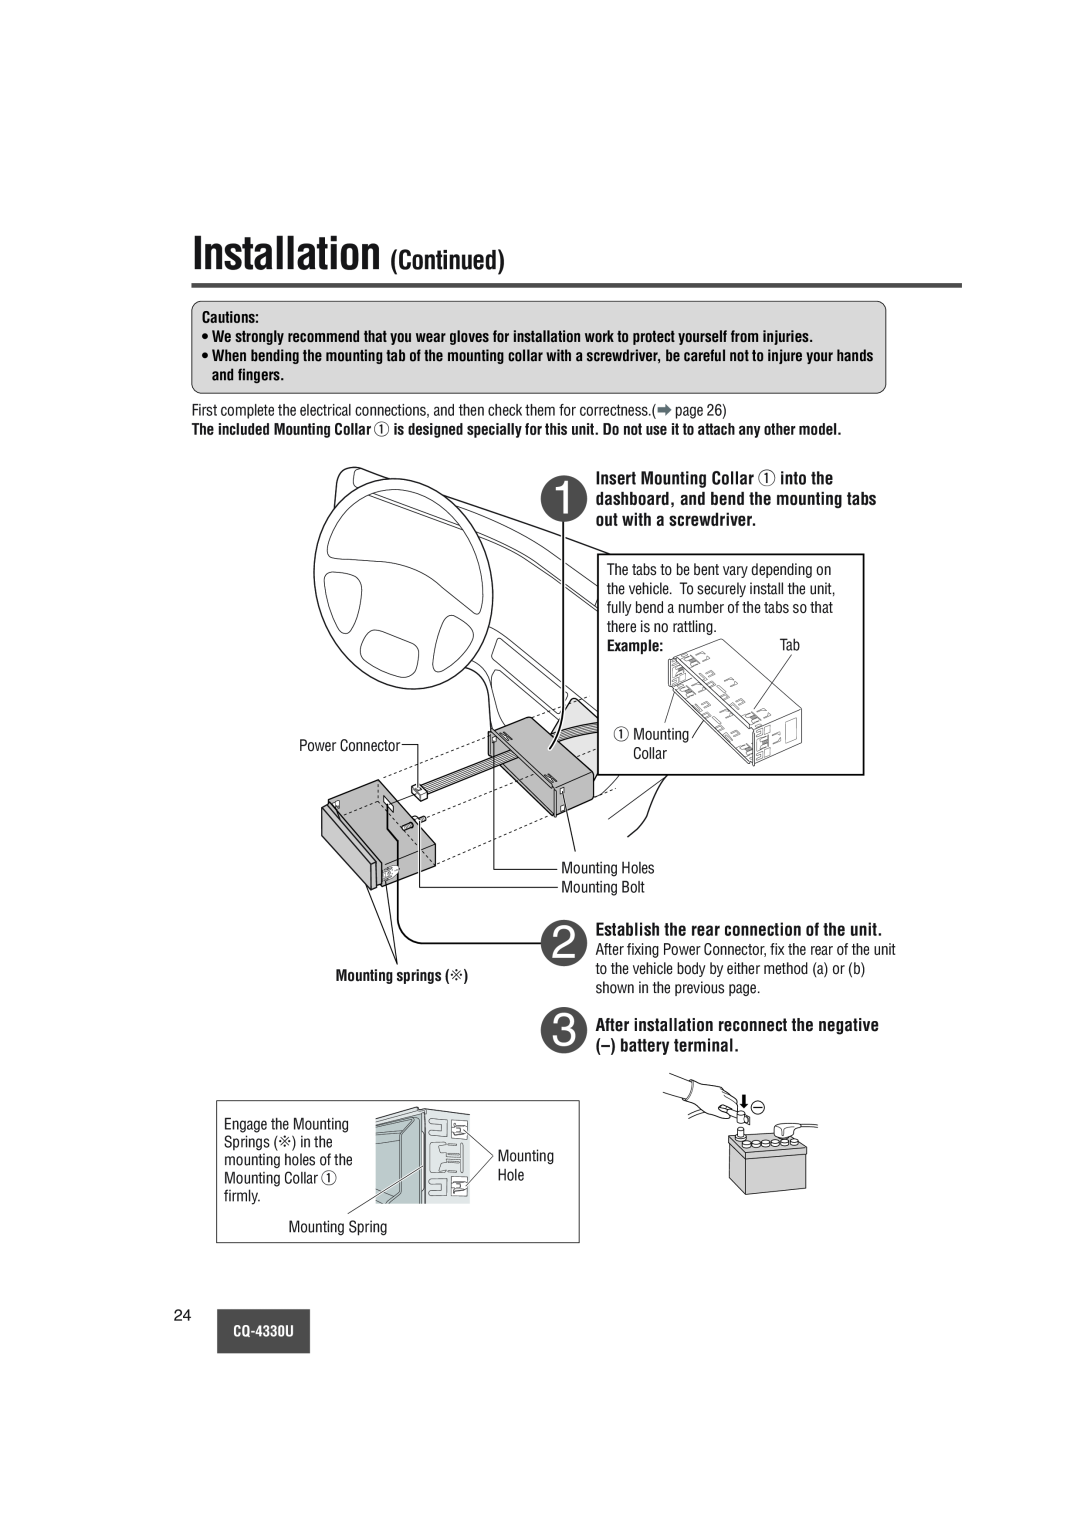 Panasonic CQ-4330U manual Installation Continued, Cautions, Mounting springs C 